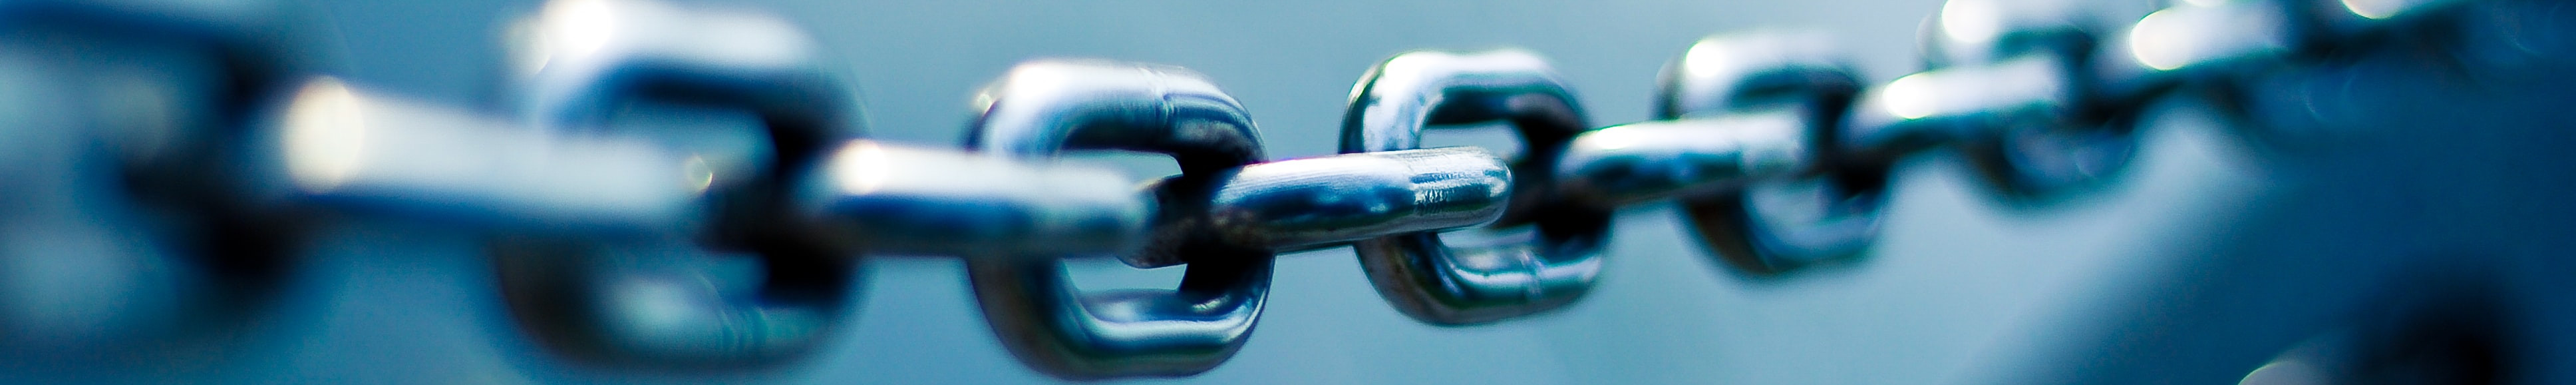 Log4j vulnerability, supply chain attacks and SBOMs